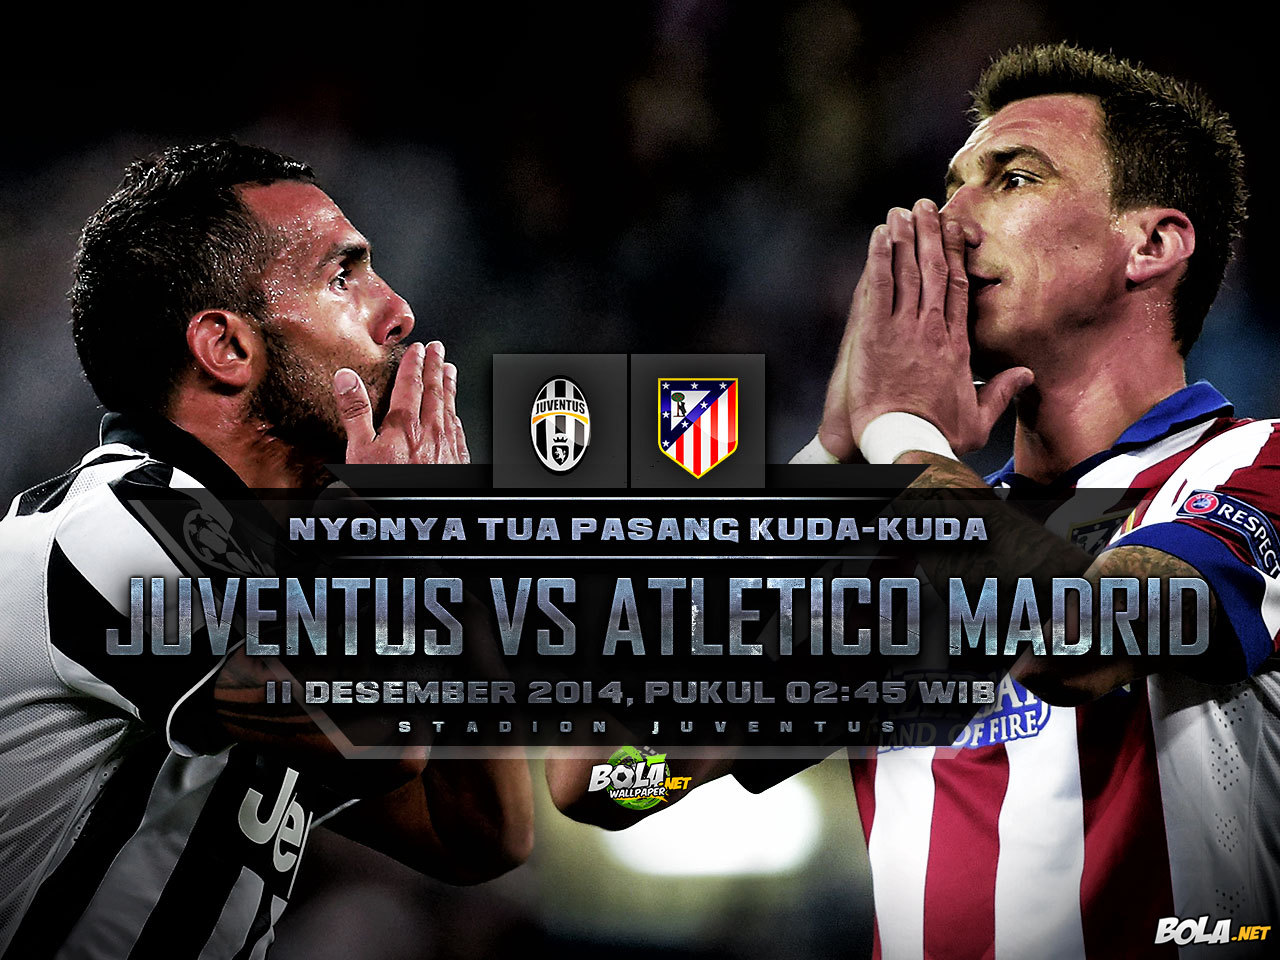 Deskripsi : Wallpaper Juventus Vs Atletico Madrid, size: 1280x960